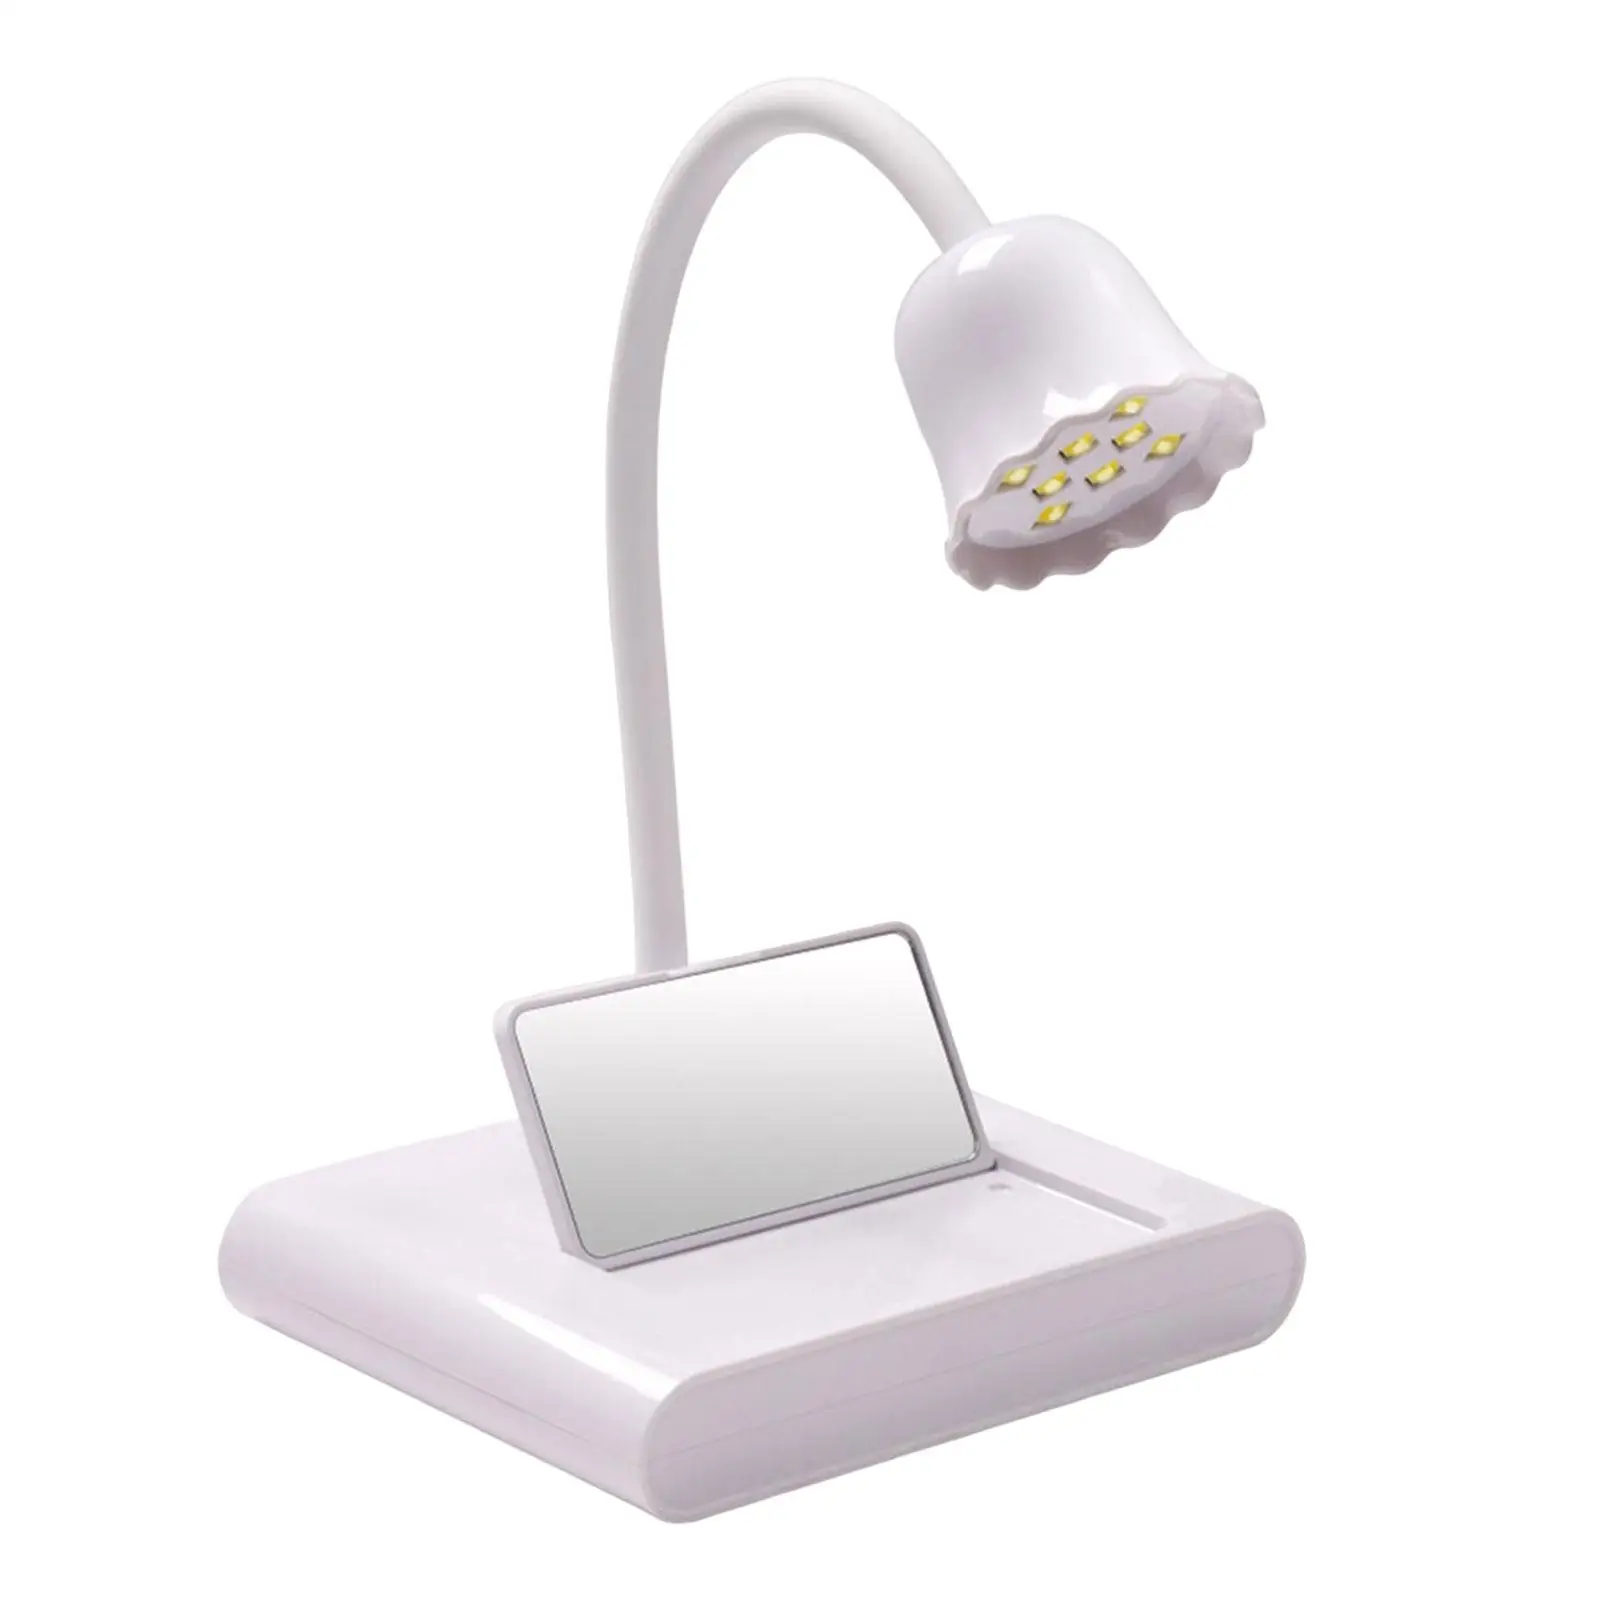 LED Nail Lamp 360 Degree Rotatable Rechargeable 20W Professional Flexible Portable Nail Dryer Machine for Fingernail Toenail Gel